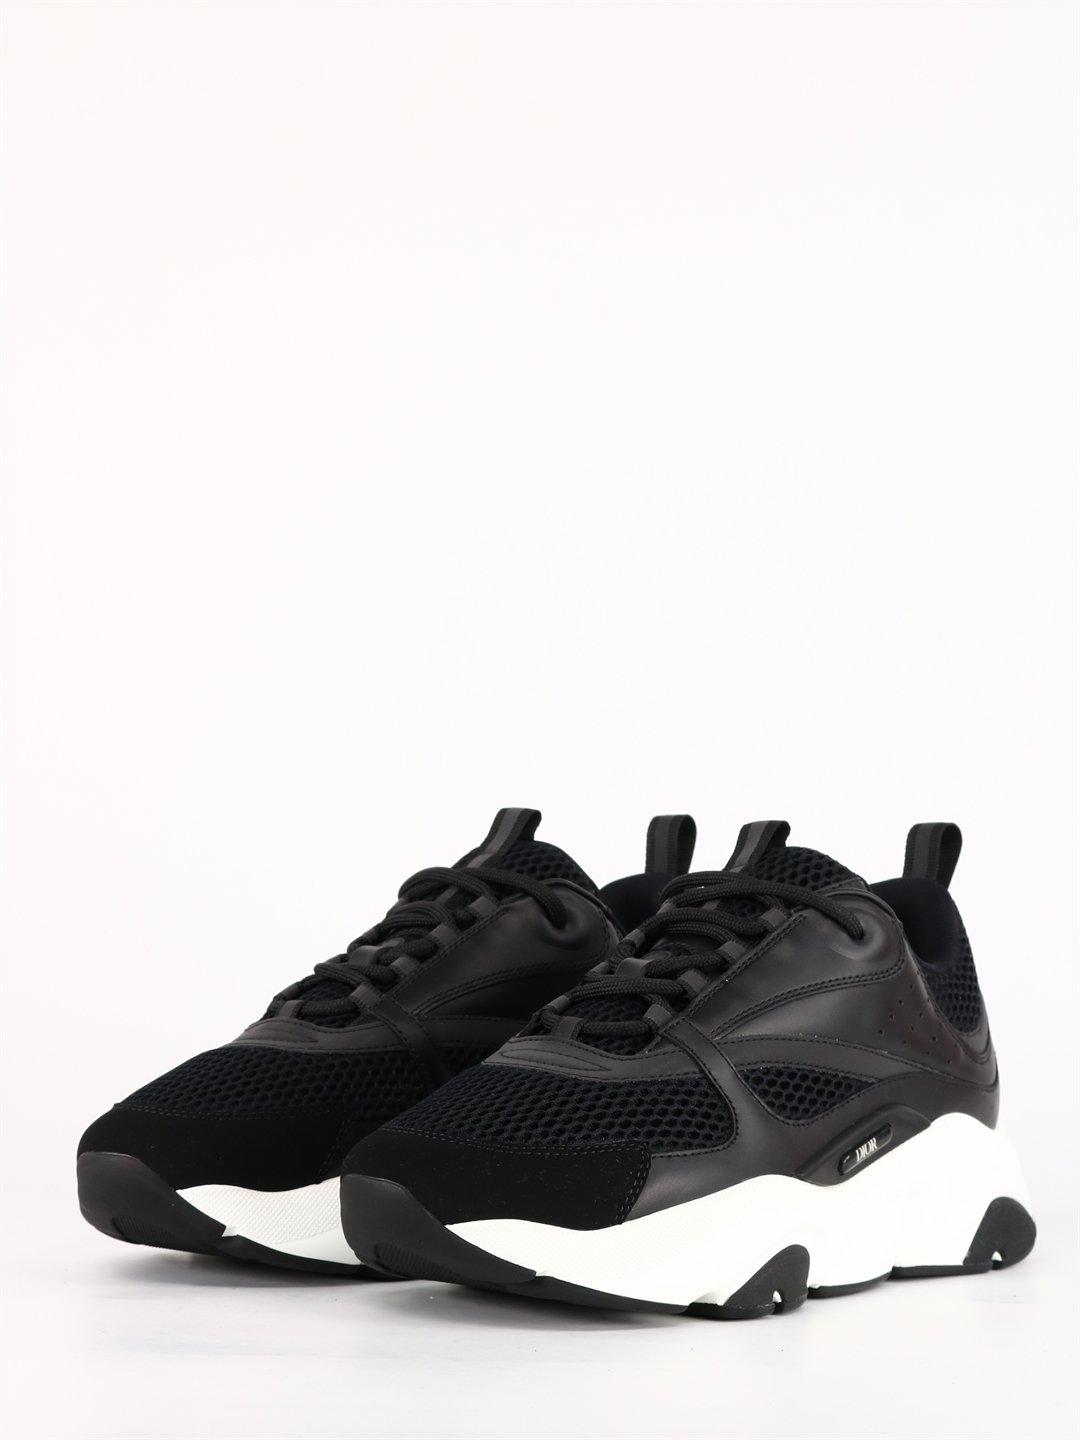 Dior B22 Black Reflective Vs. ￼ Balenciaga Triple S!! Which Is a Better  Shoe? 